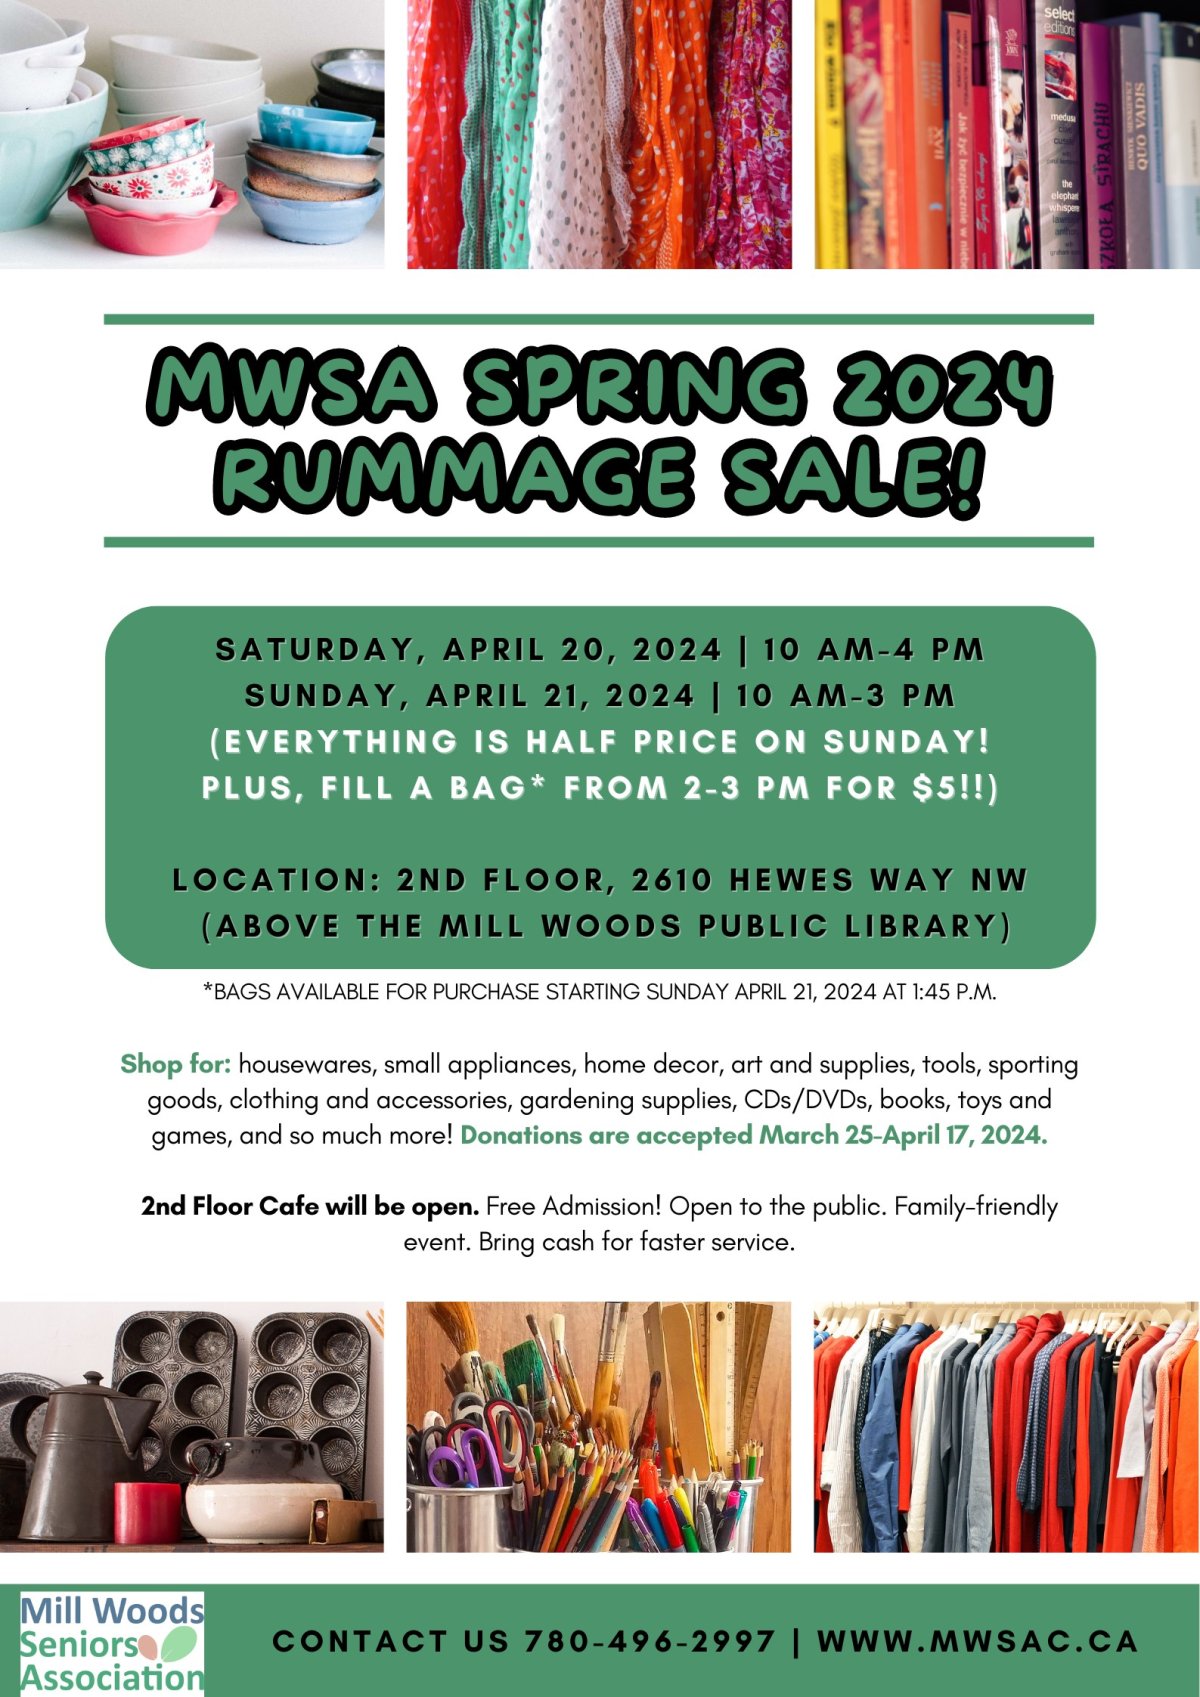 Mill Woods Seniors Association Spring Rummage Sale - image